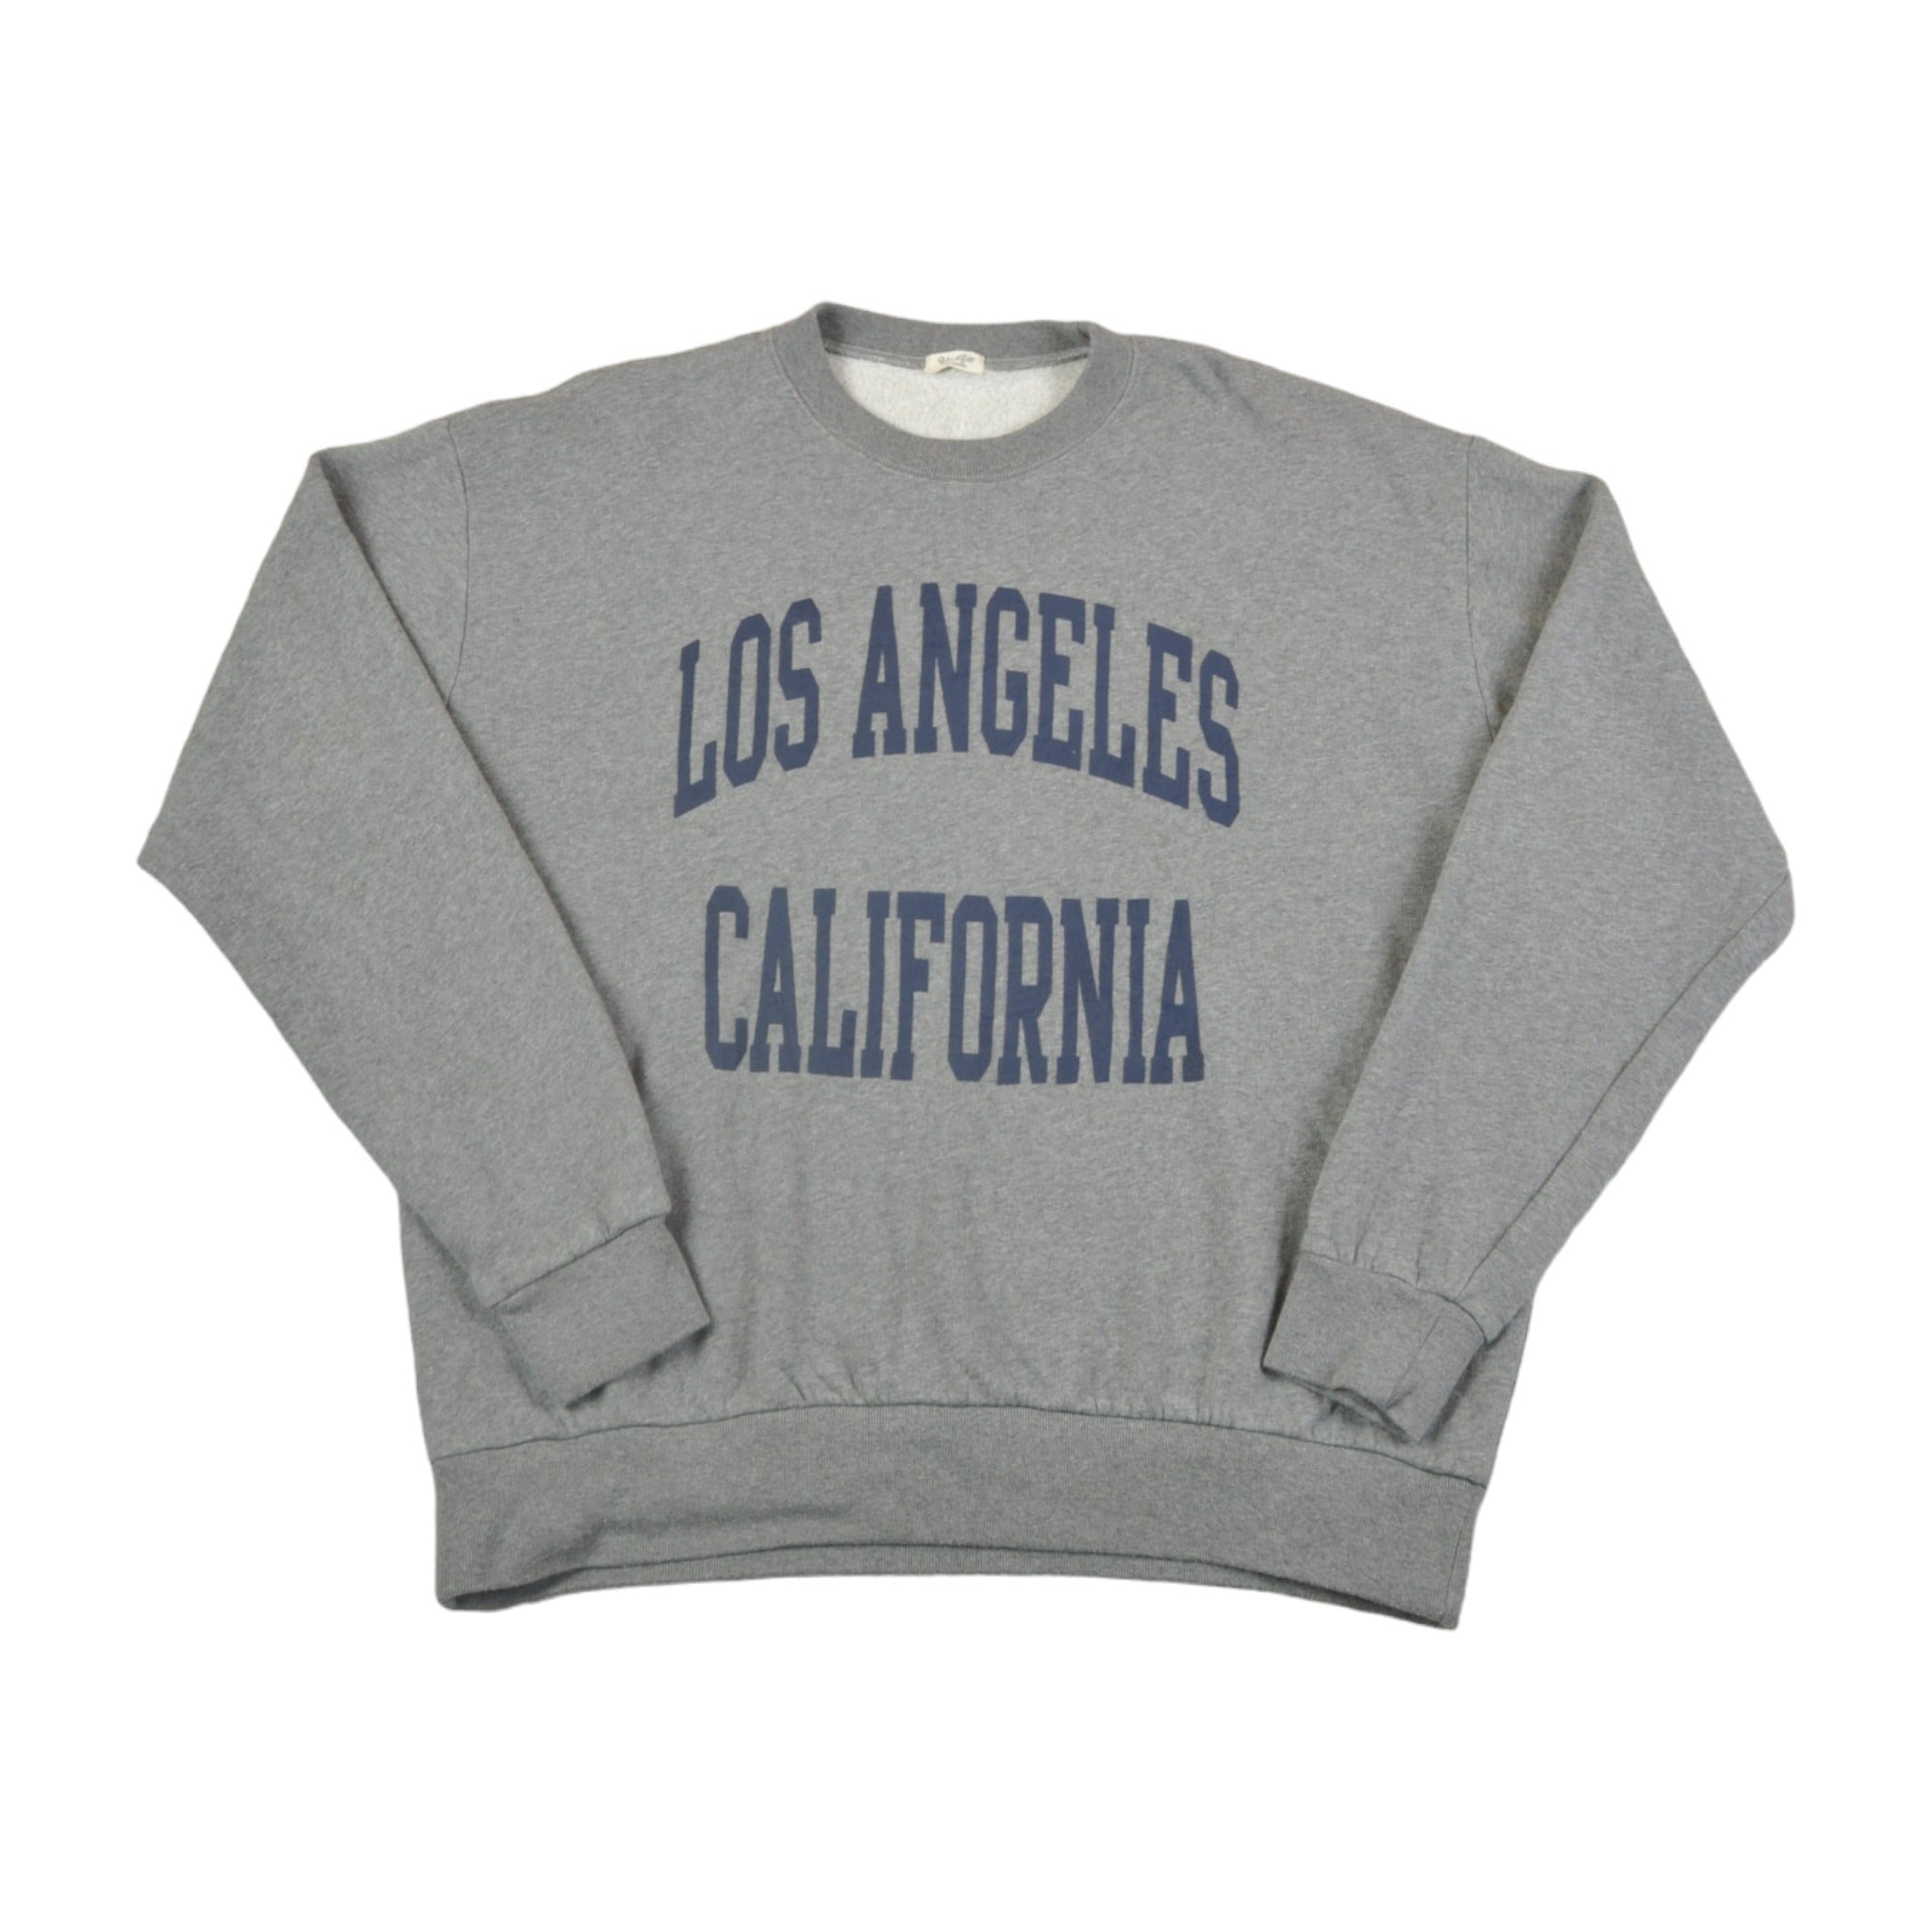  Los Angeles California - Vintage Sweatshirt for Women